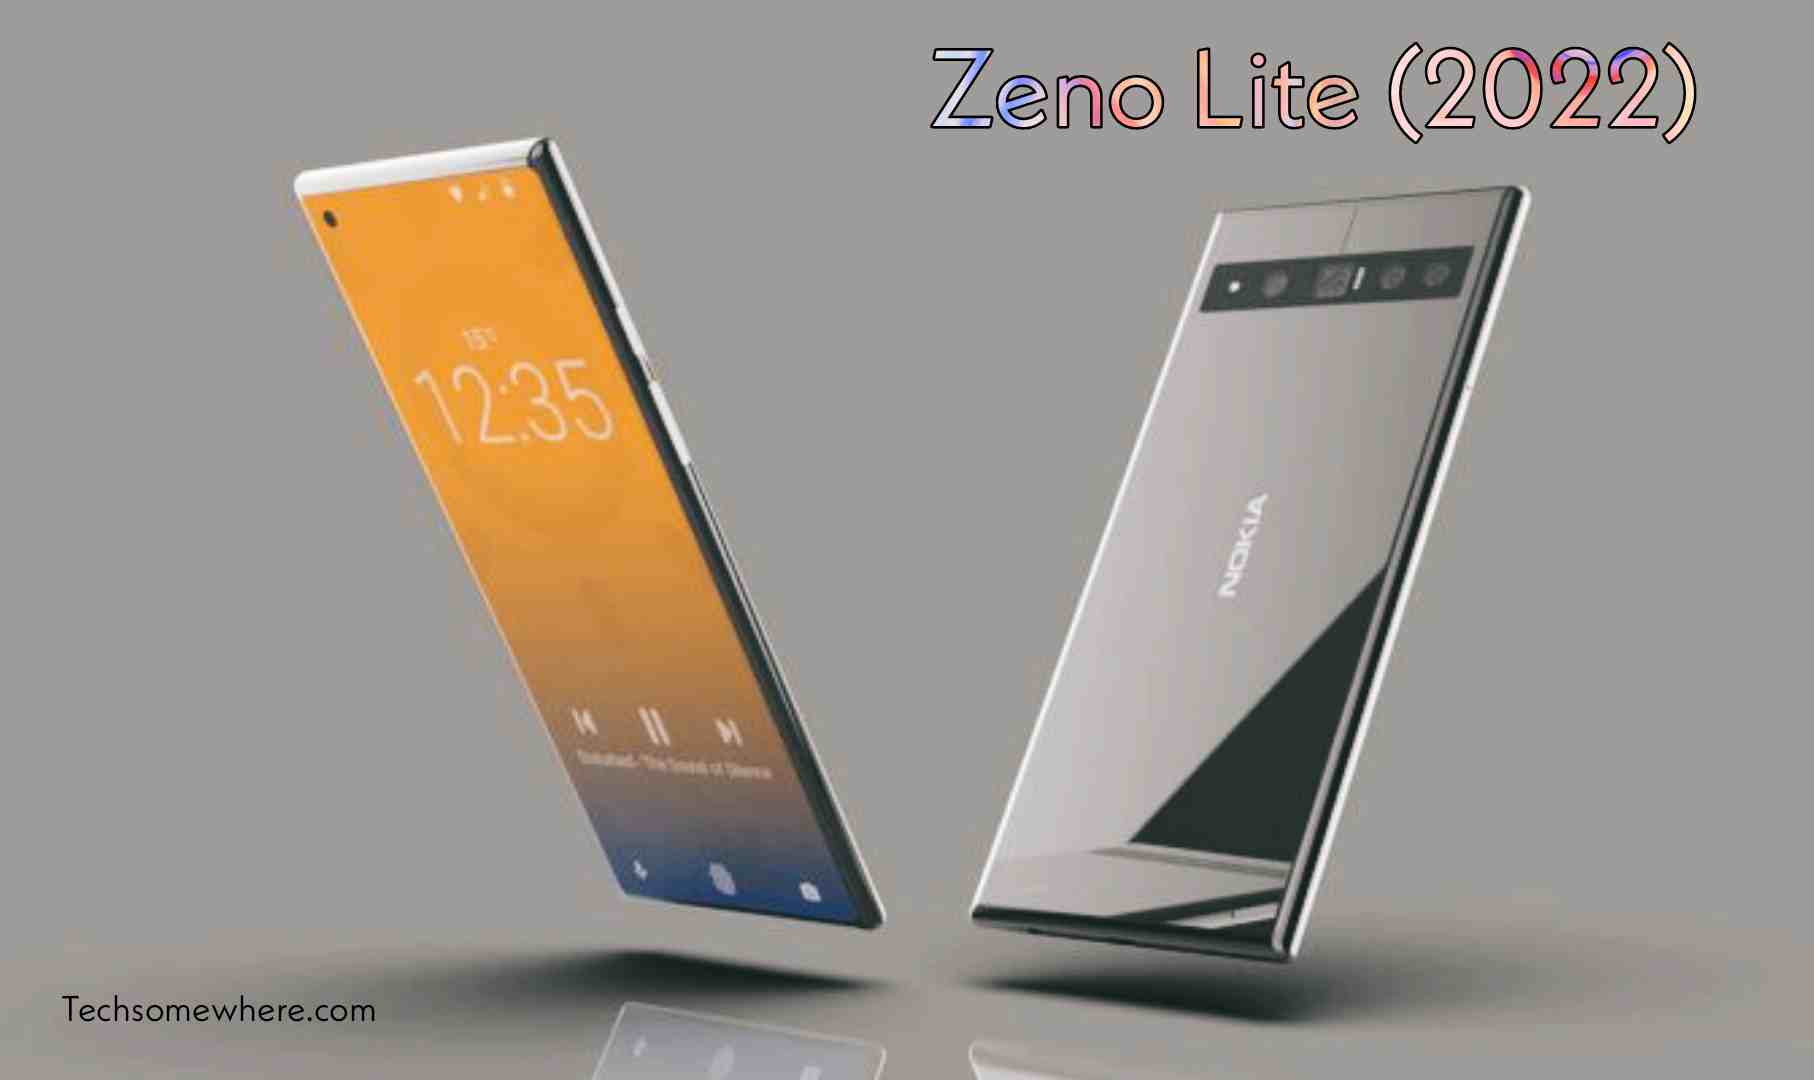 Nokia Zeno Lite (2022) Price, Full Specs, Rumours & Release Date - Techsomewhere